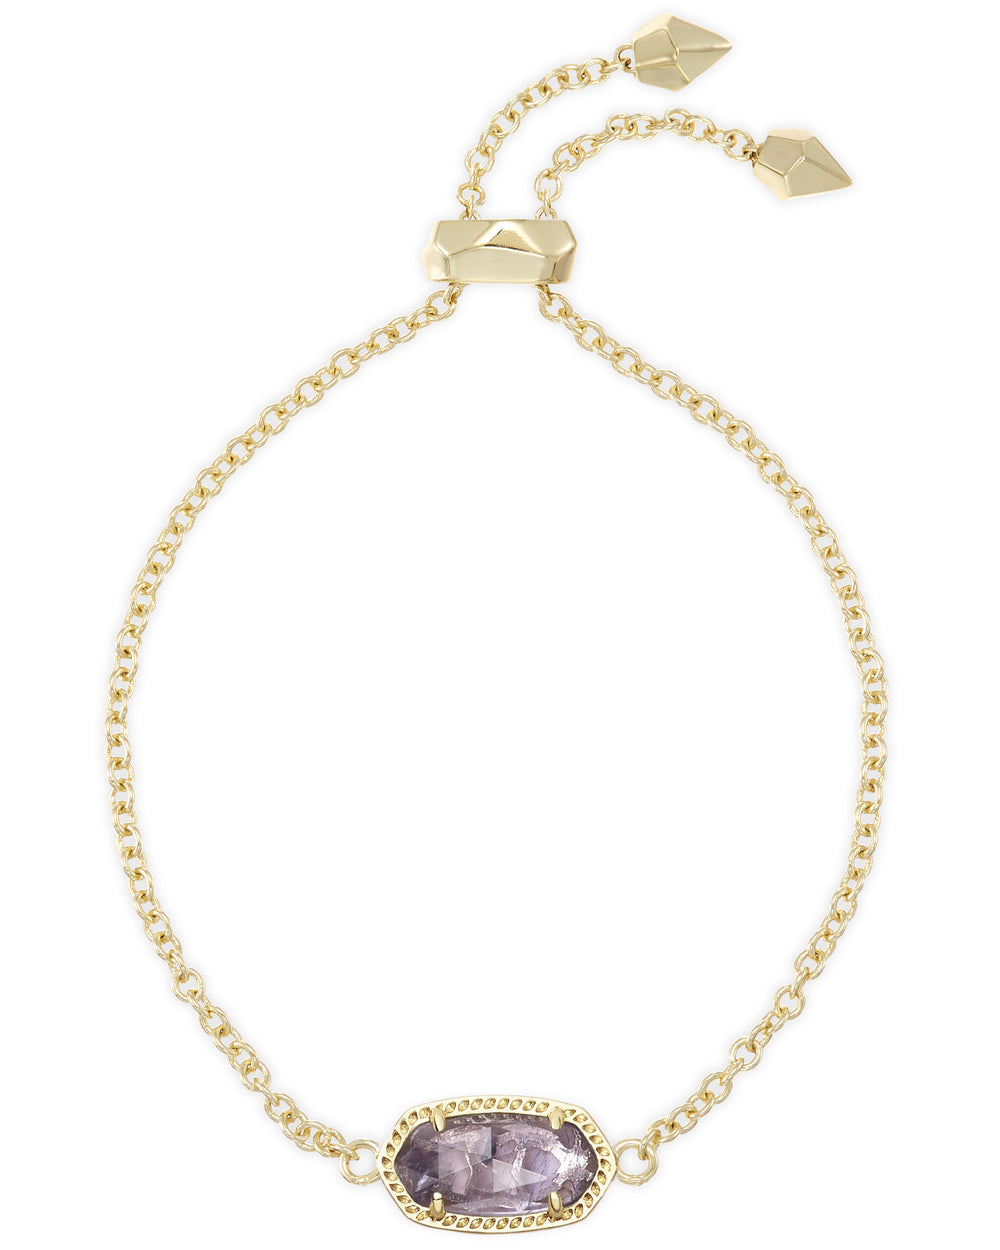 Elaina Gold Adjustable Chain Bracelet in Purple Amethyst